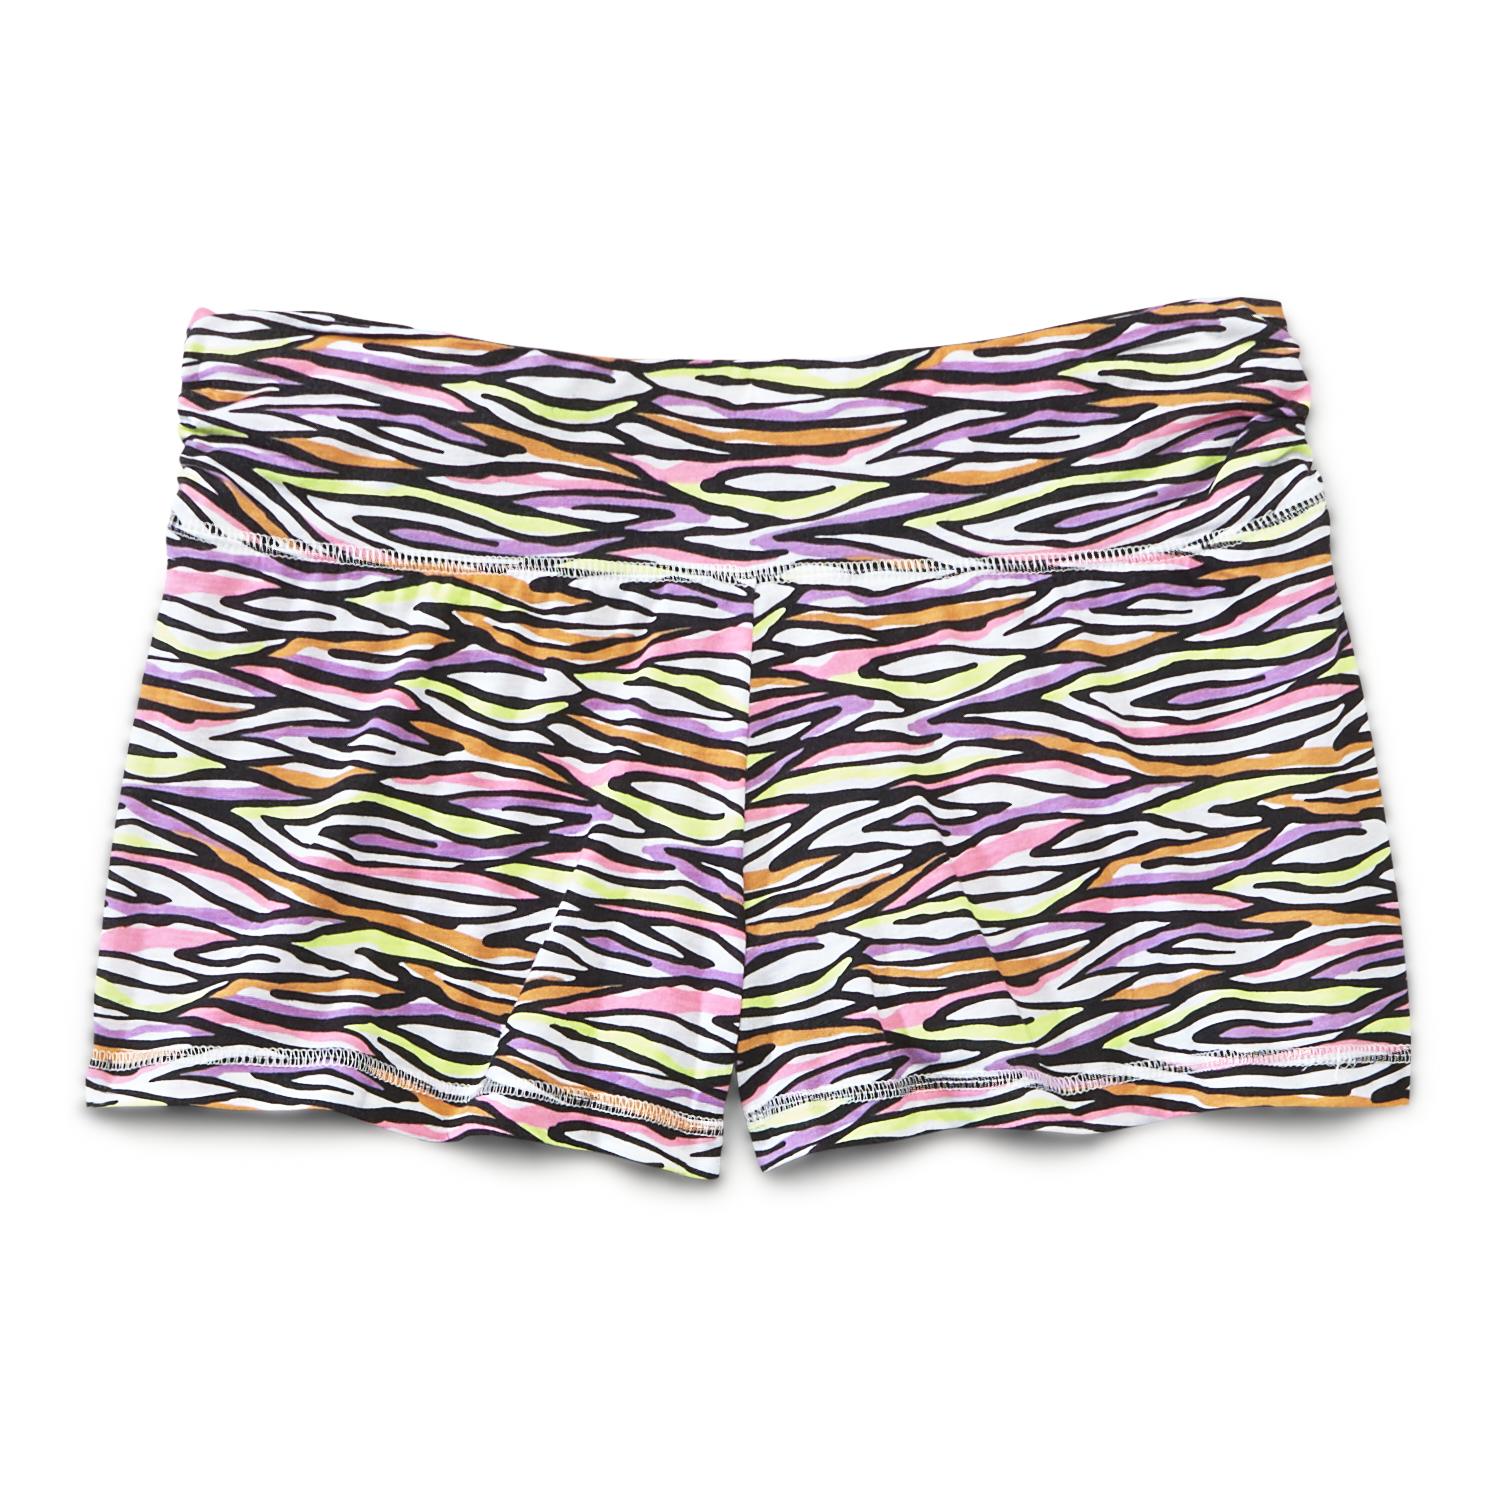 Joe Boxer Women's Ruched Lounge Shorts - Neon Zebra Print